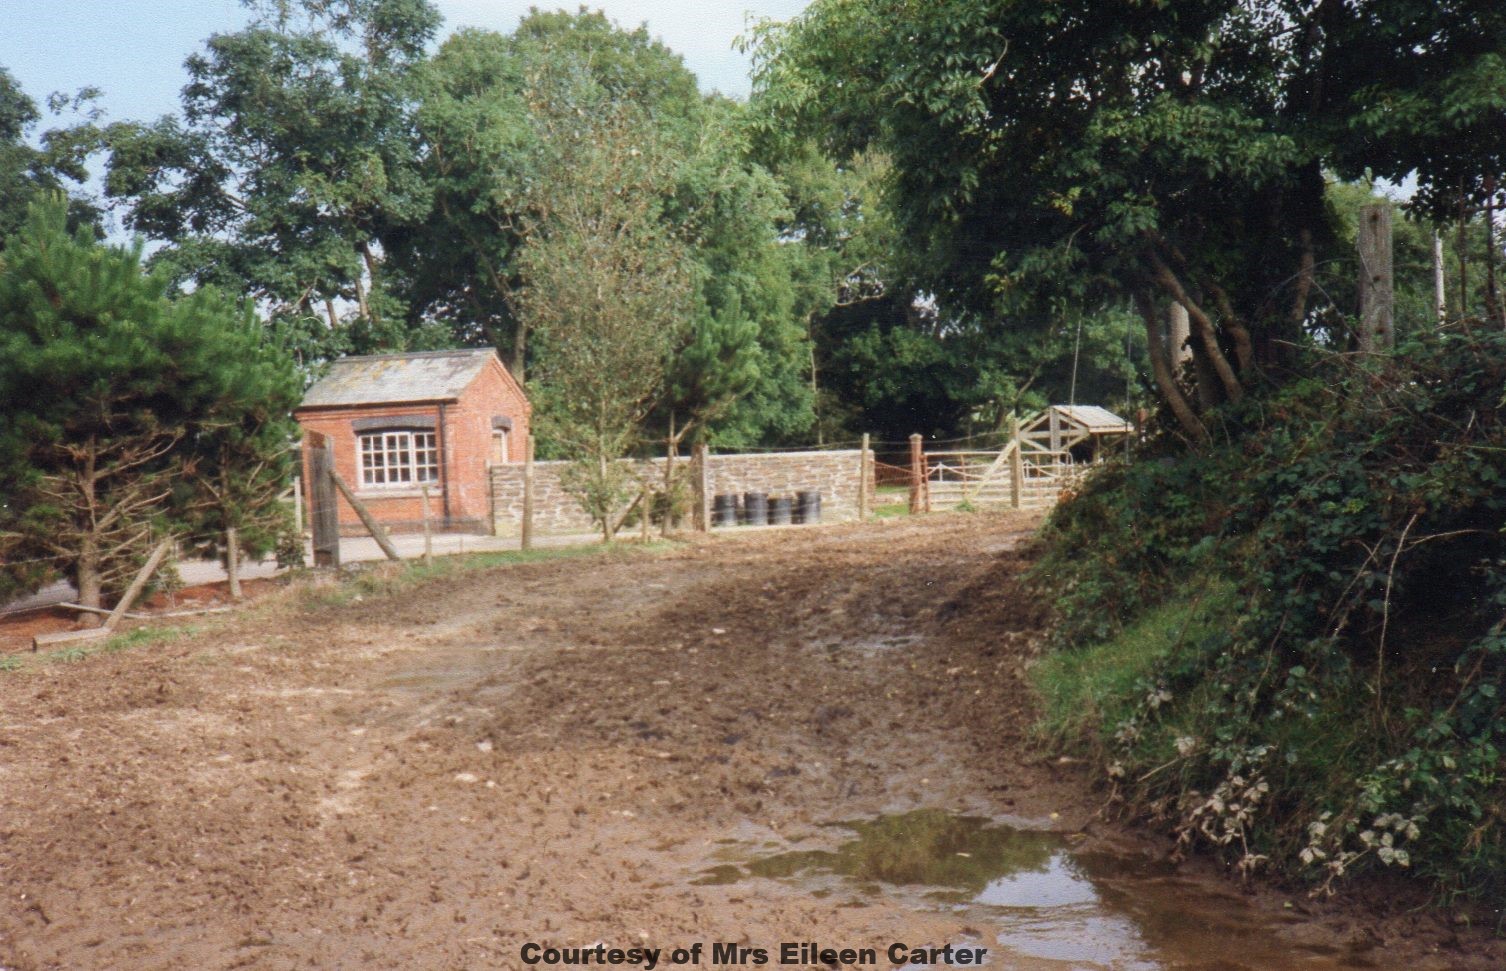 The old Weighbridge at Shepherds